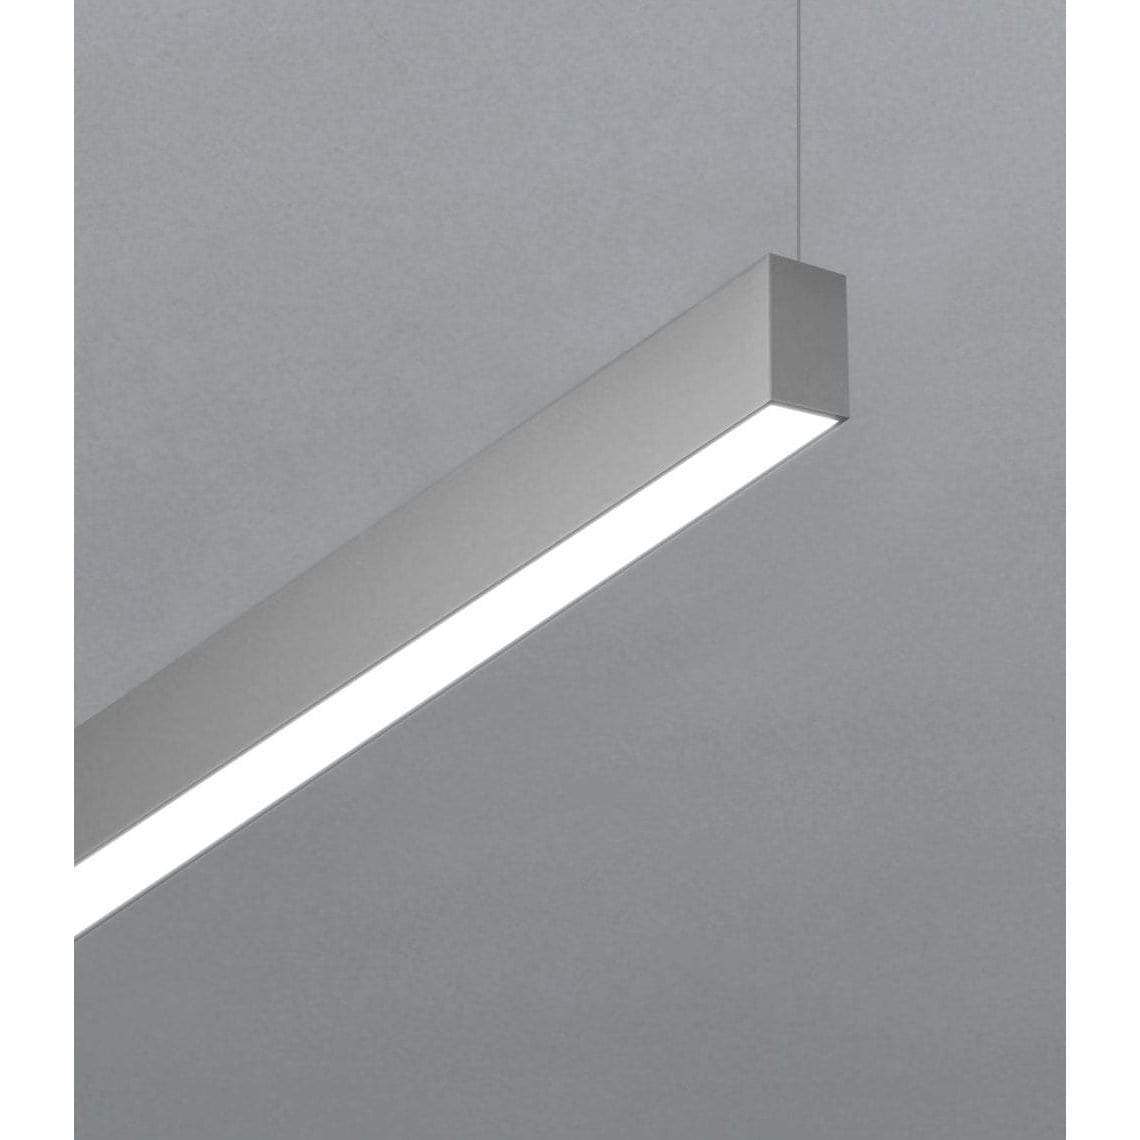 POE Texas Lighting Denton Suspended Linear PoE Lights - Sample 1.3" x 4' Linear Diffuser 4 ft, 3500K (Surface)